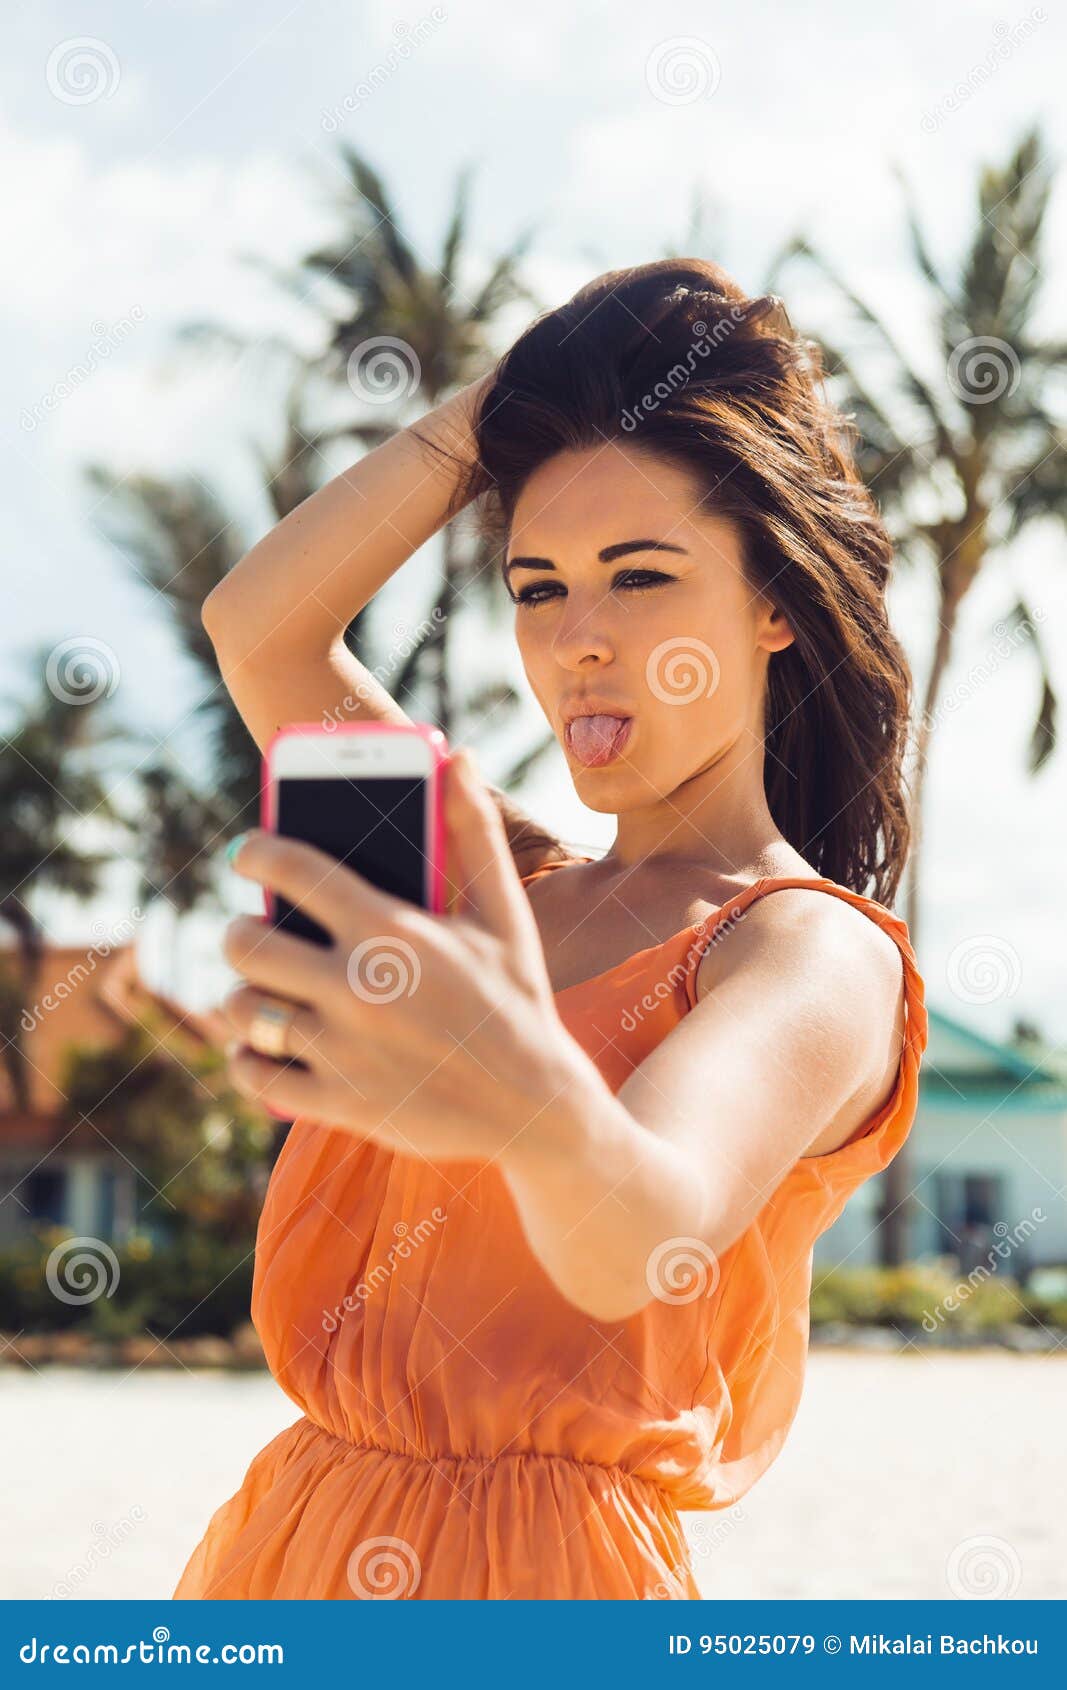 cute girl make selfie tropical beach close up sexy lady light dress sunglasses posing tongue self portrait 95025079